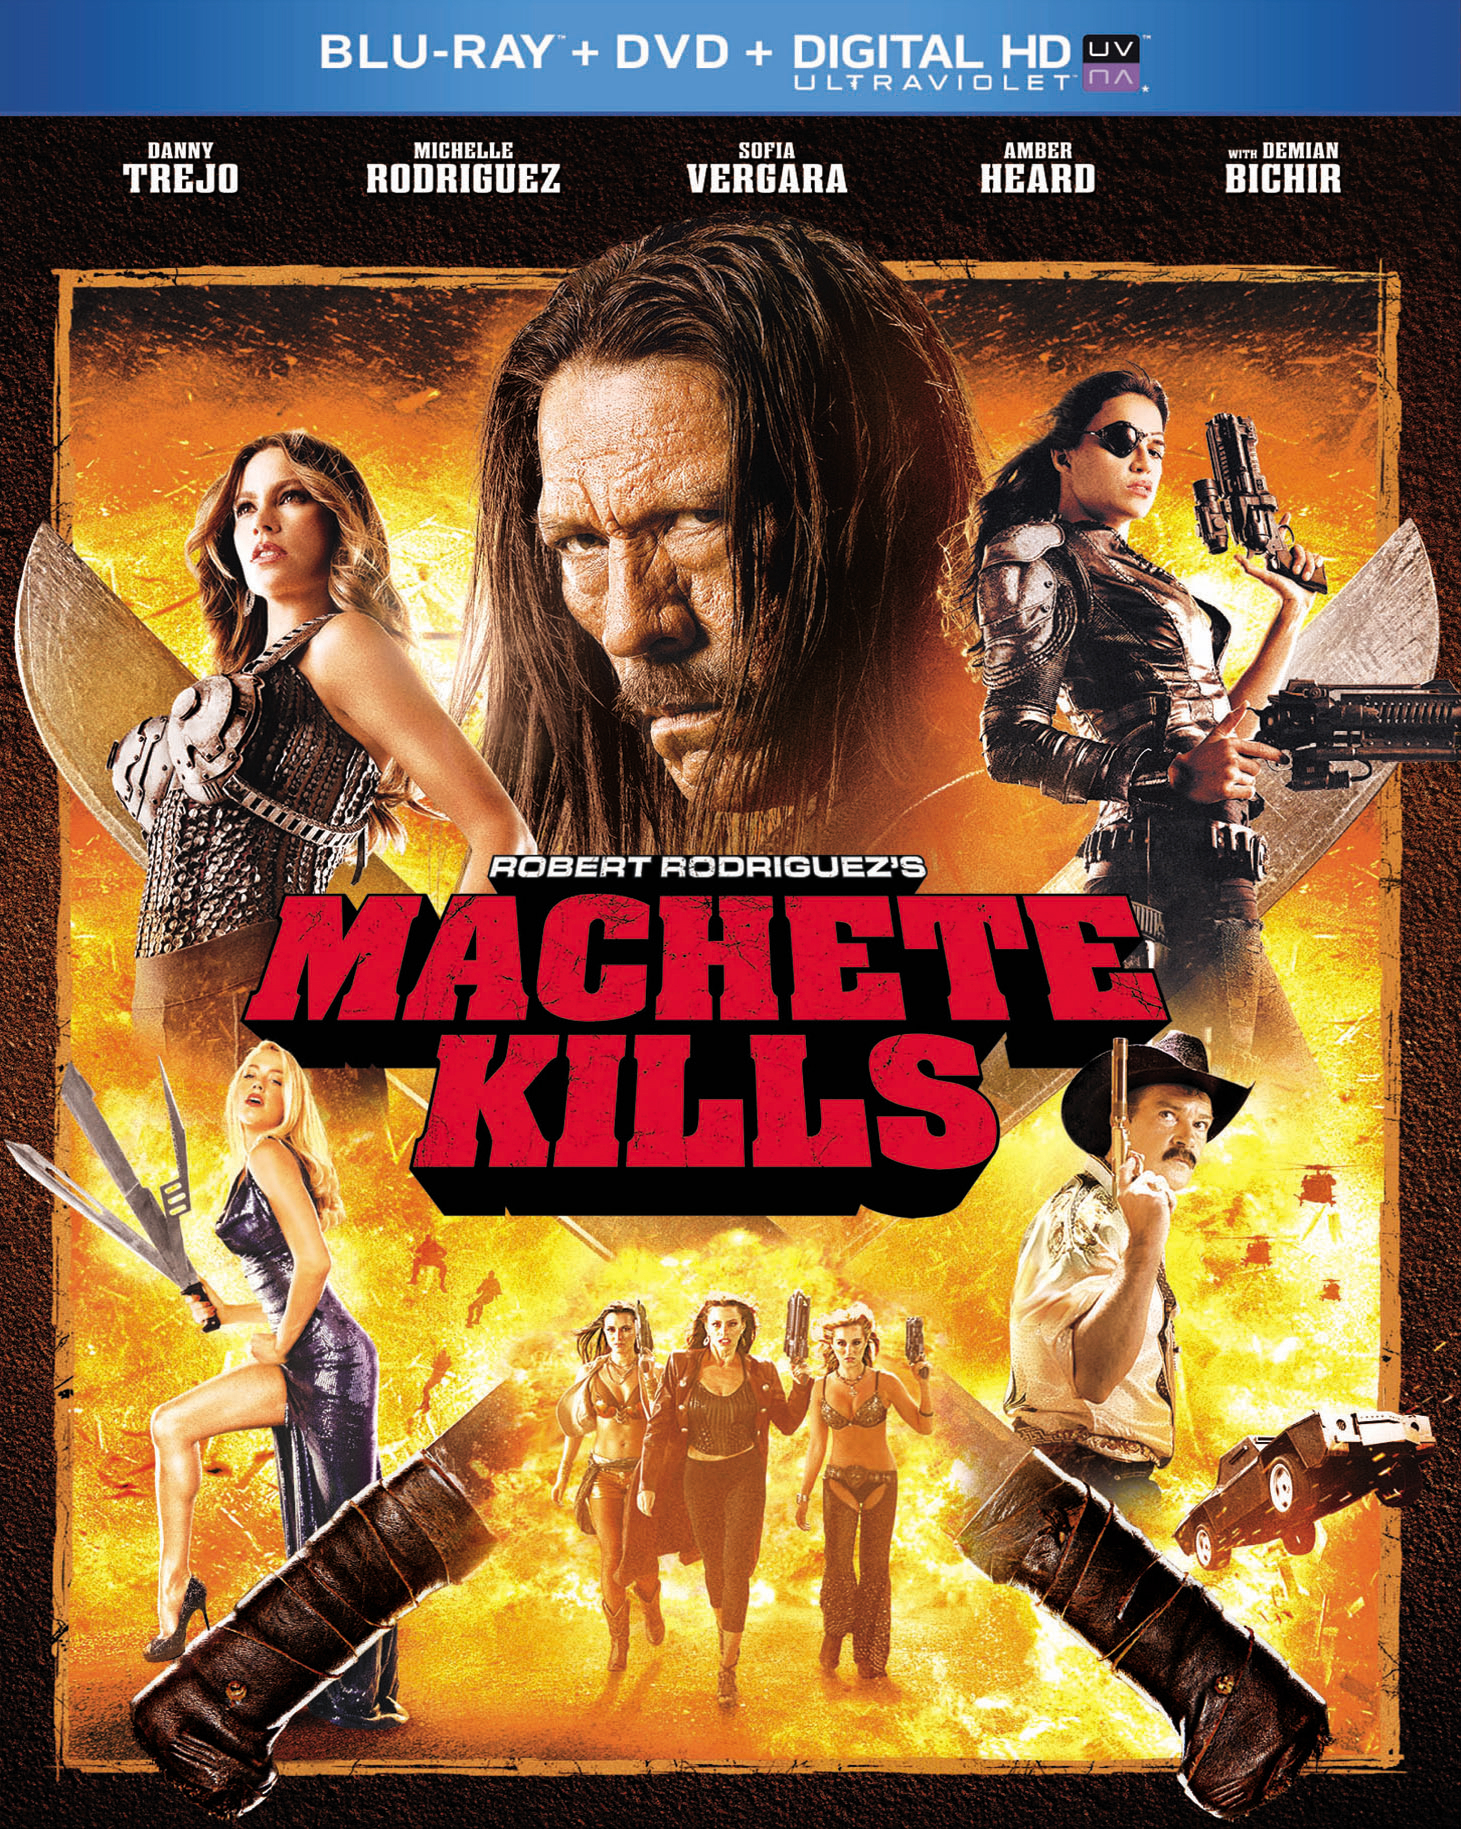 Buy Machete DVD + Digital + Ultraviolet Blu-ray |